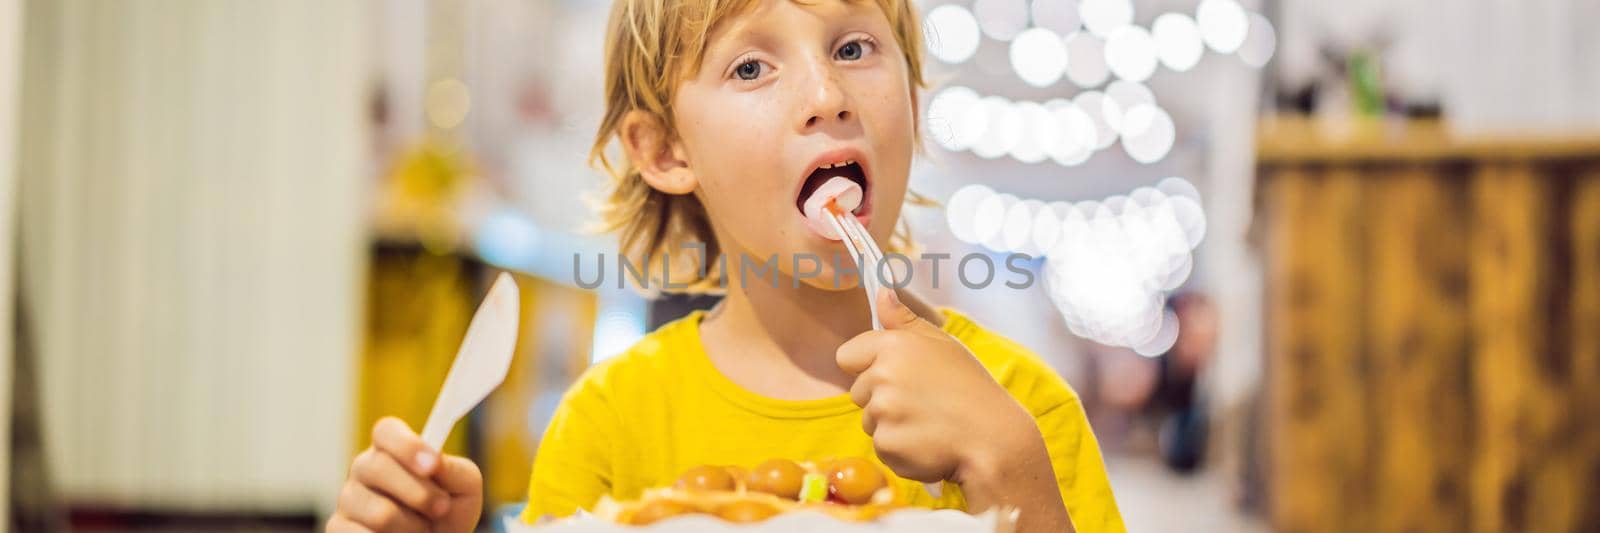 A little boy eats dessert waffles with jam in a cafe. BANNER, LONG FORMAT